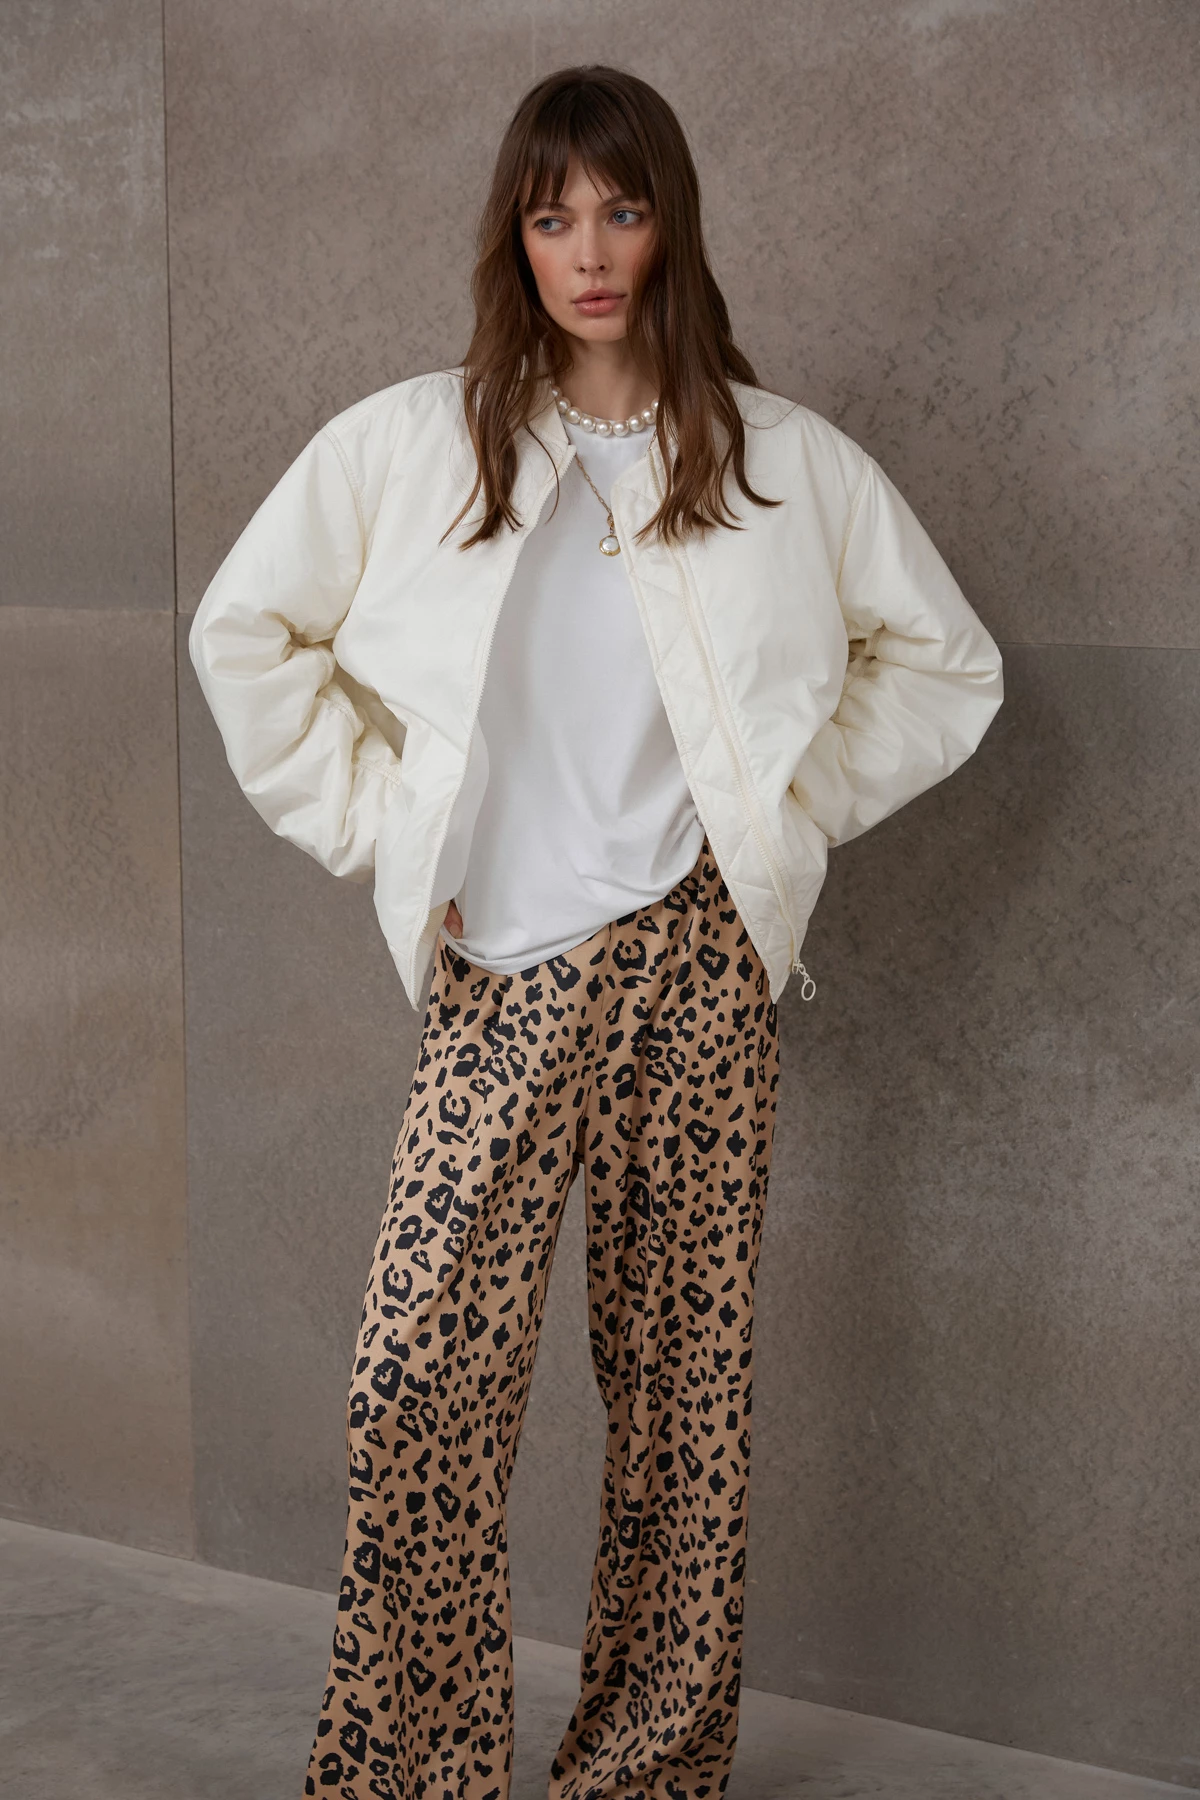 Straight satin pants in leopard print, photo 4